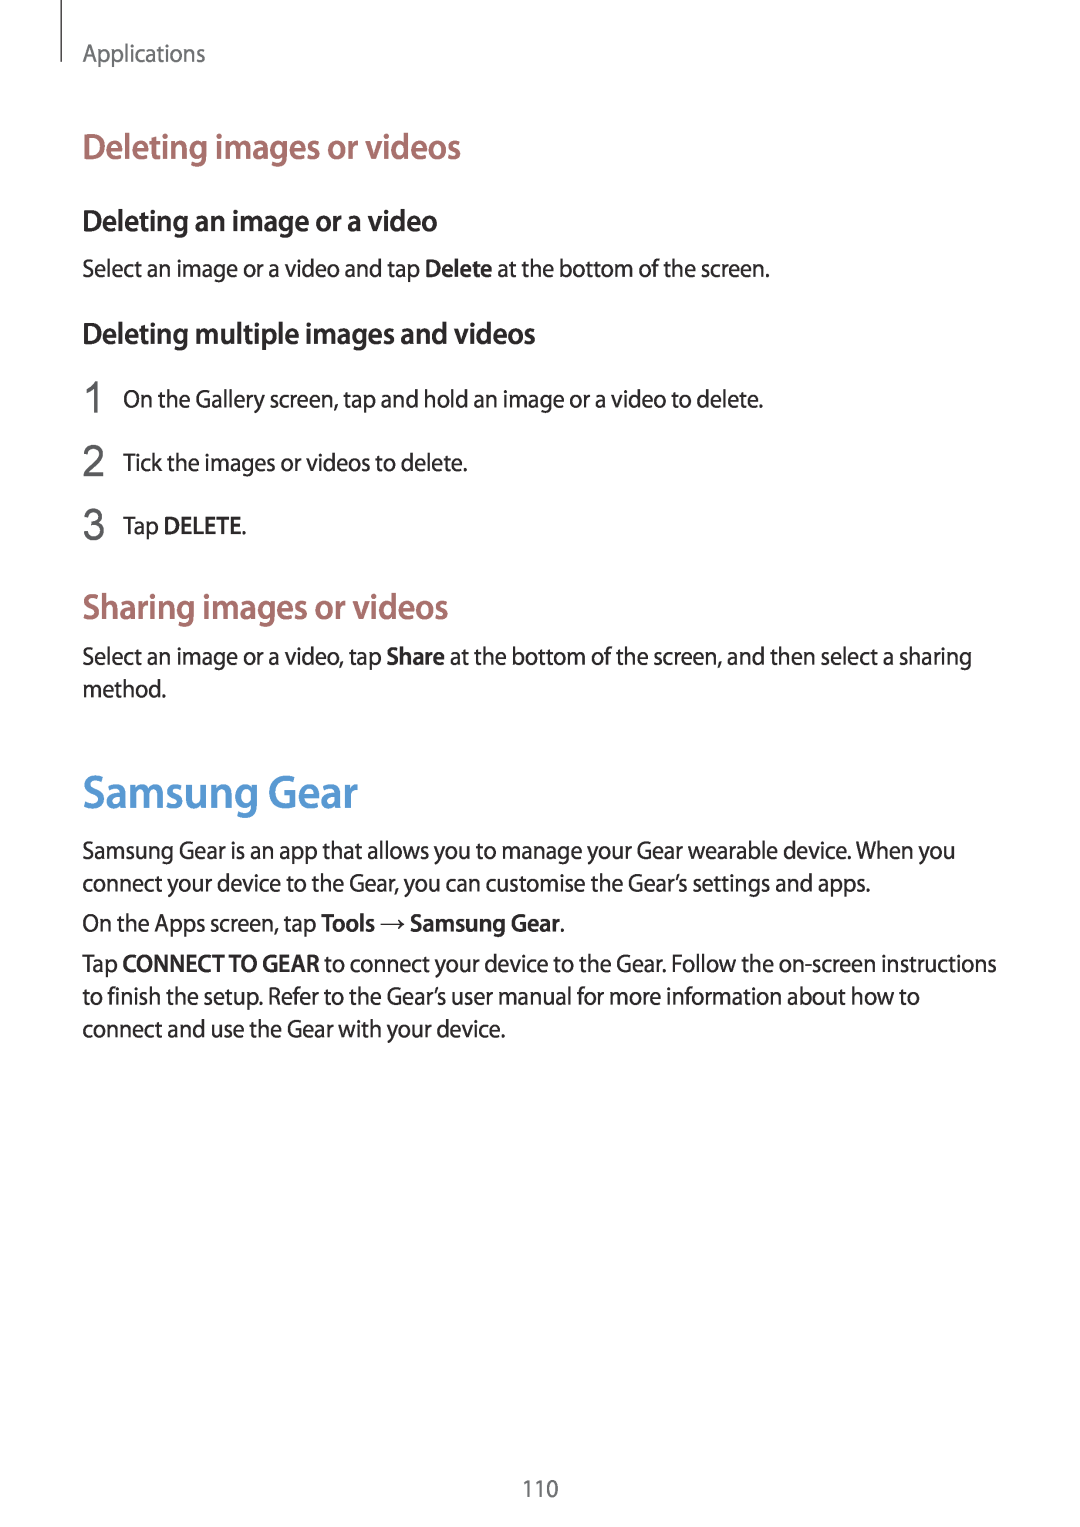 Samsung SM-G928FZKAPRT Samsung Gear, Deleting images or videos, Sharing images or videos, Deleting an image or a video 